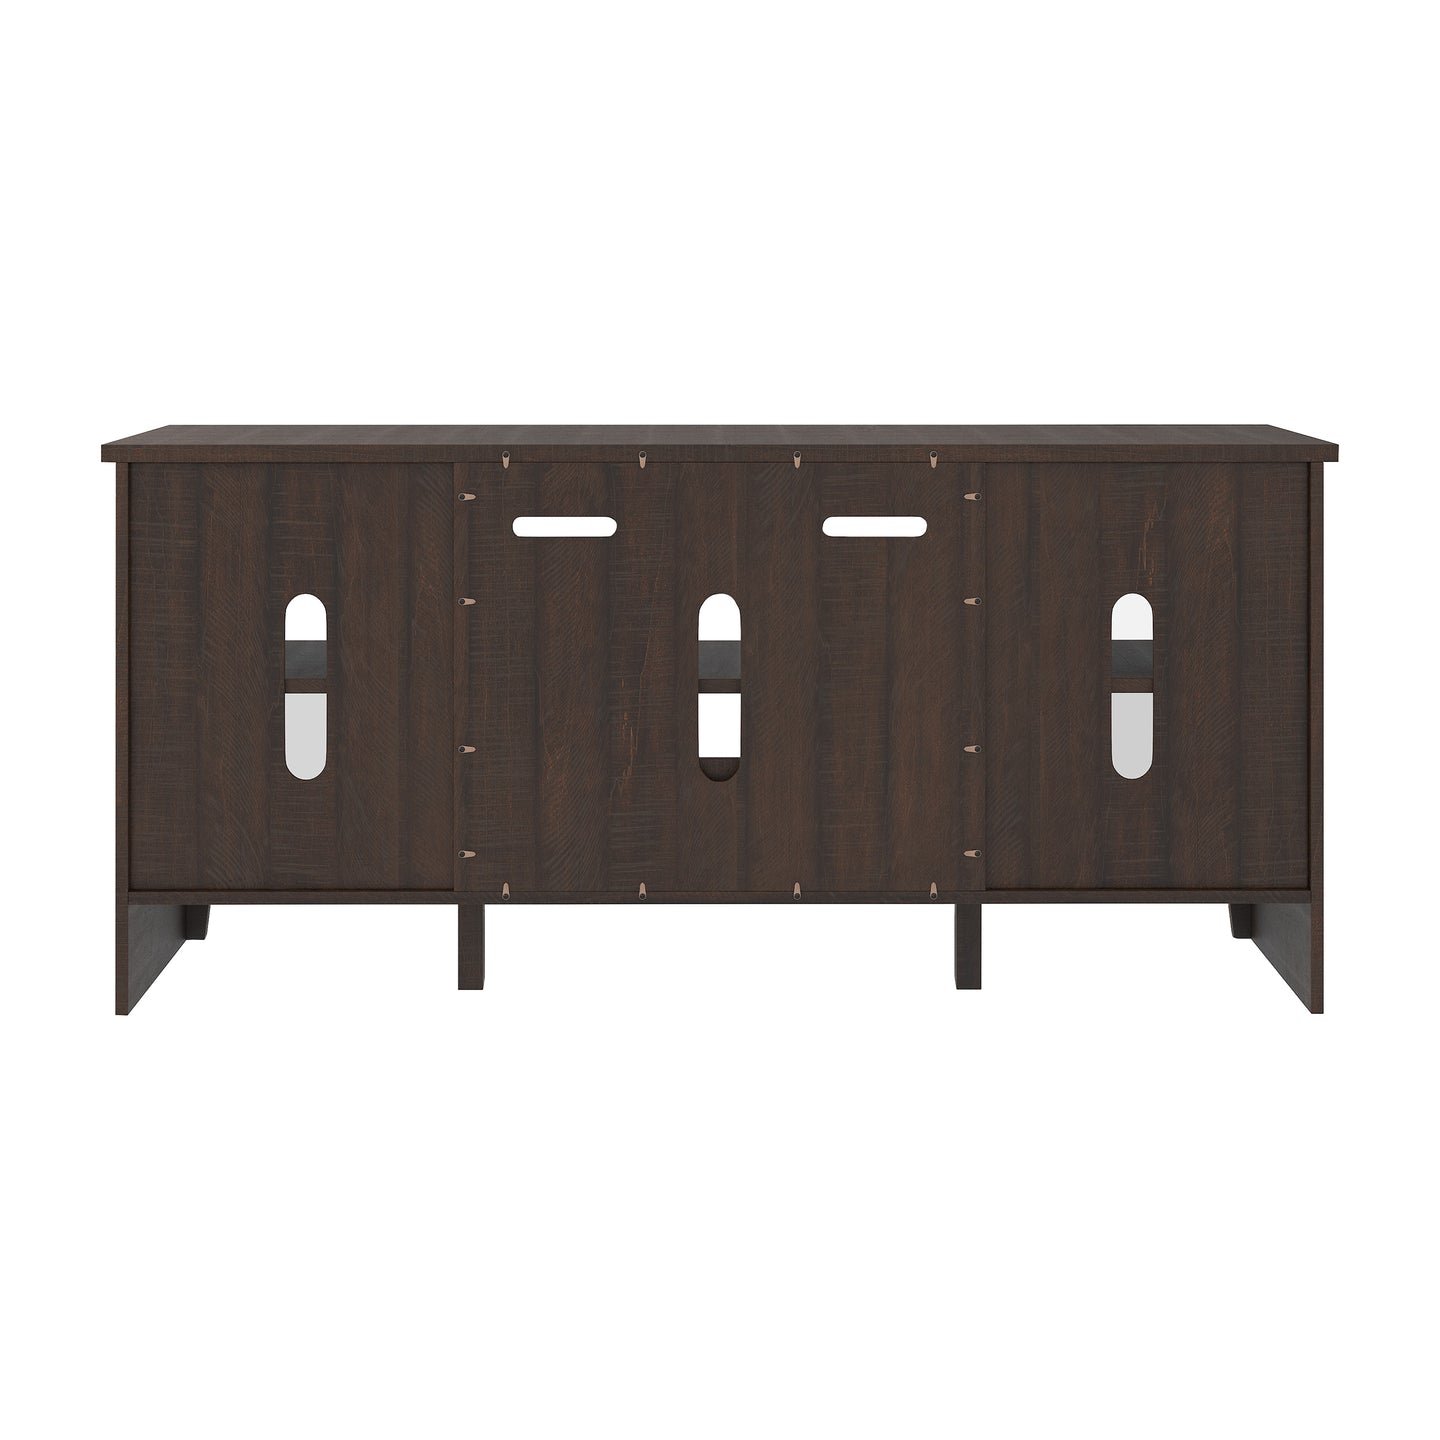 Camiburg LG TV Stand w/Fireplace Option - Warm Brown - Furniture Depot